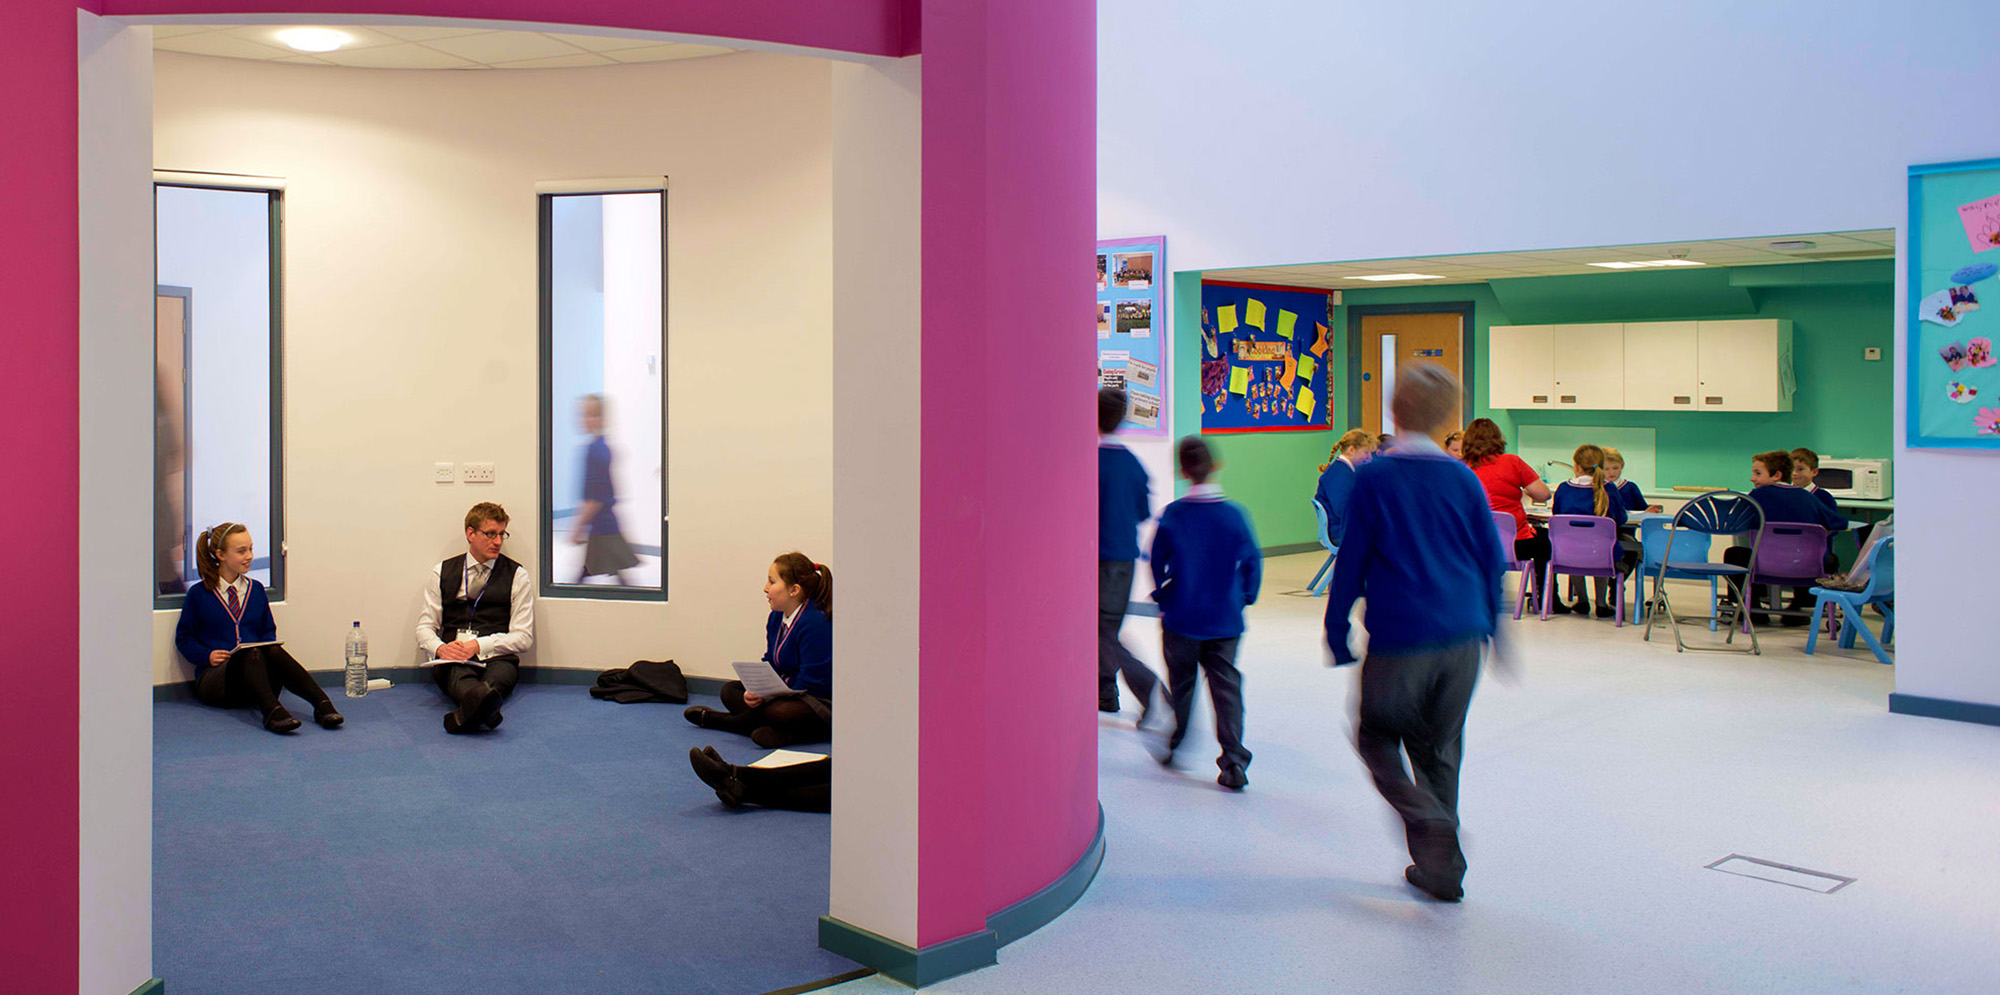 Blackpool Gateway Academy School interior